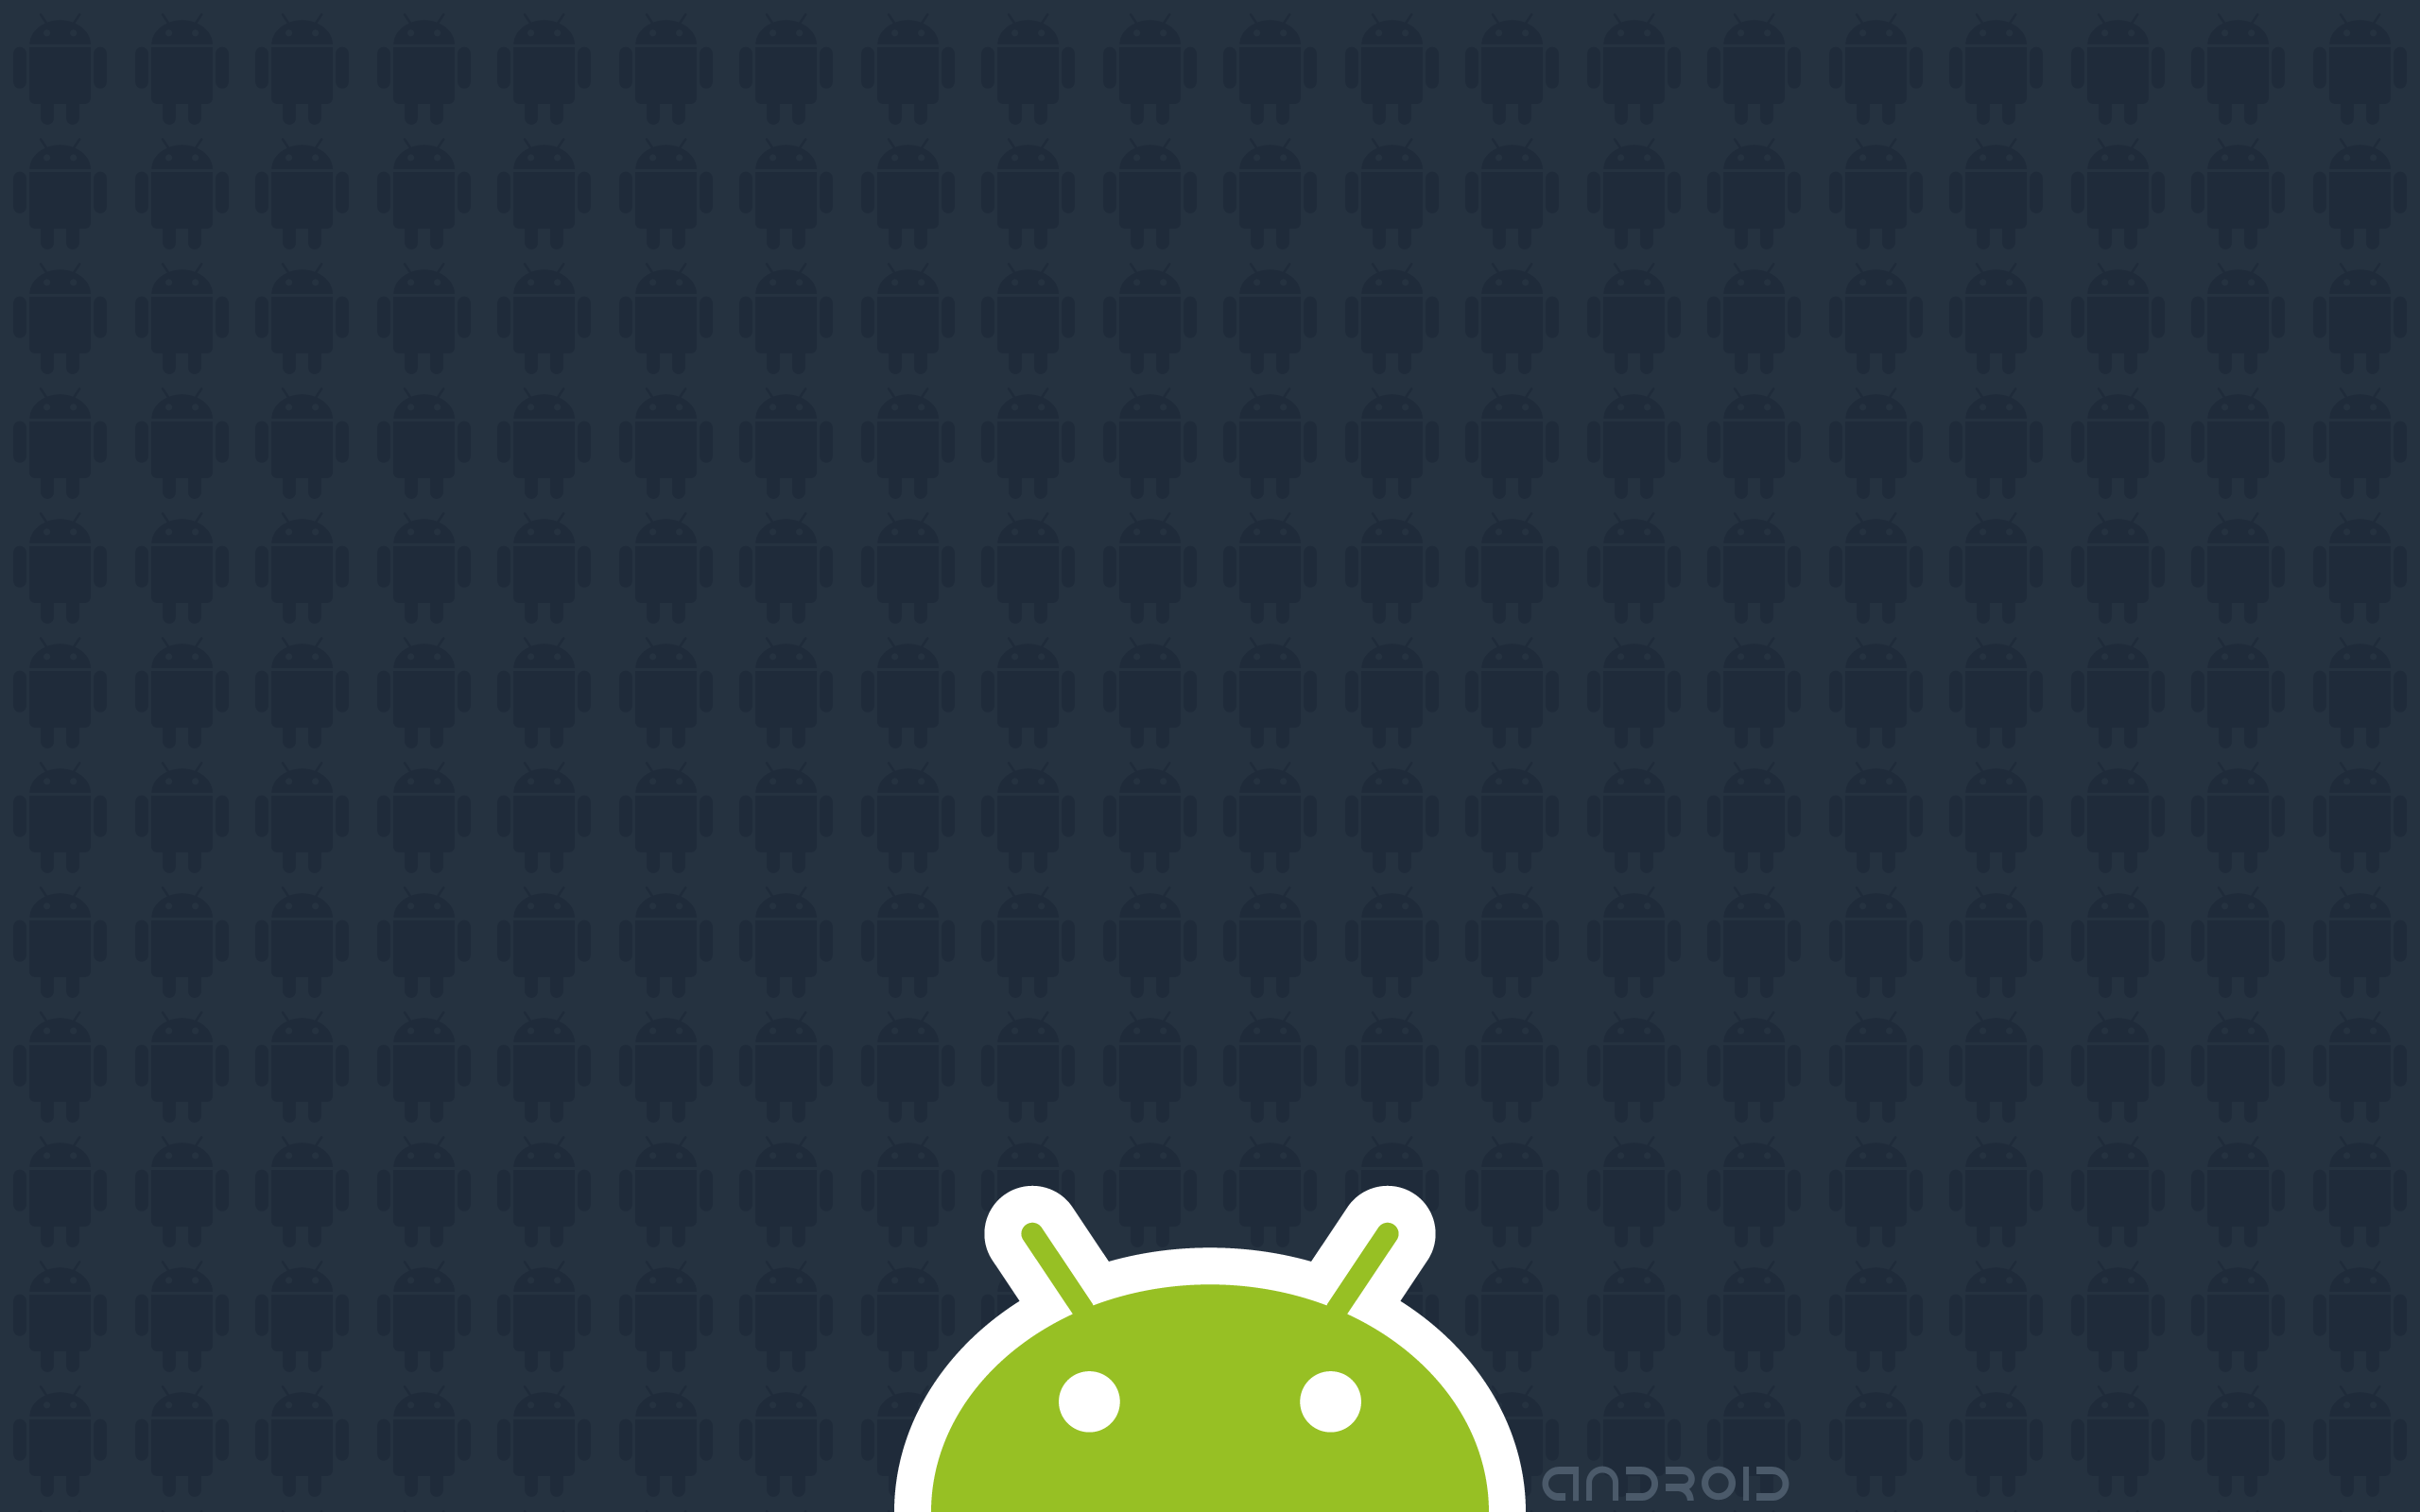 Android, Google - desktop wallpaper